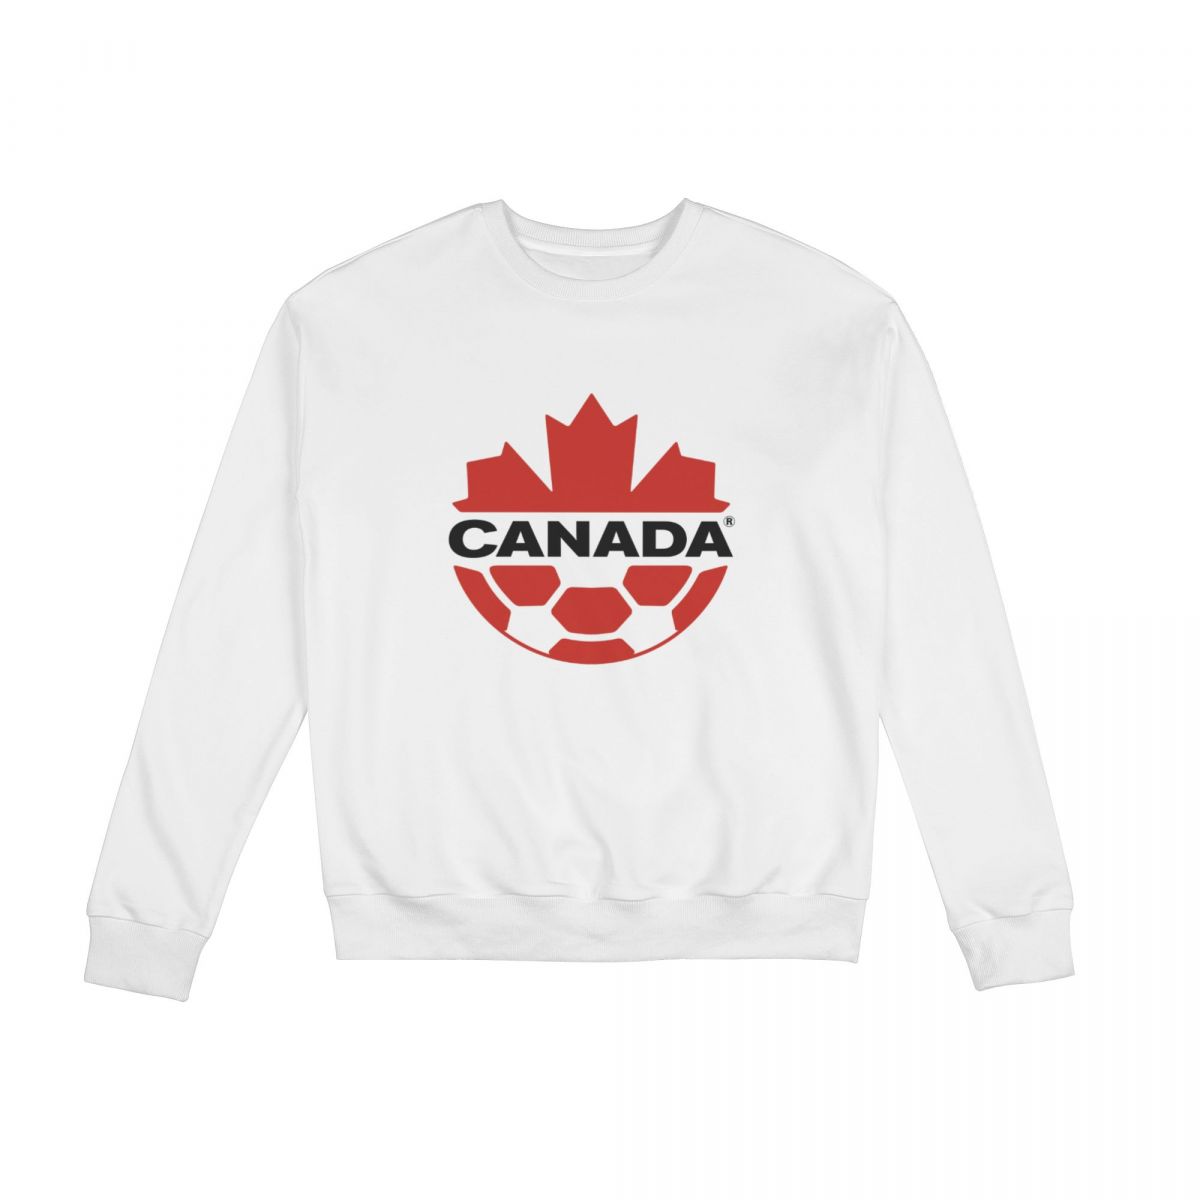 Canada National Football Team Sweatshirt Round Neck Tops